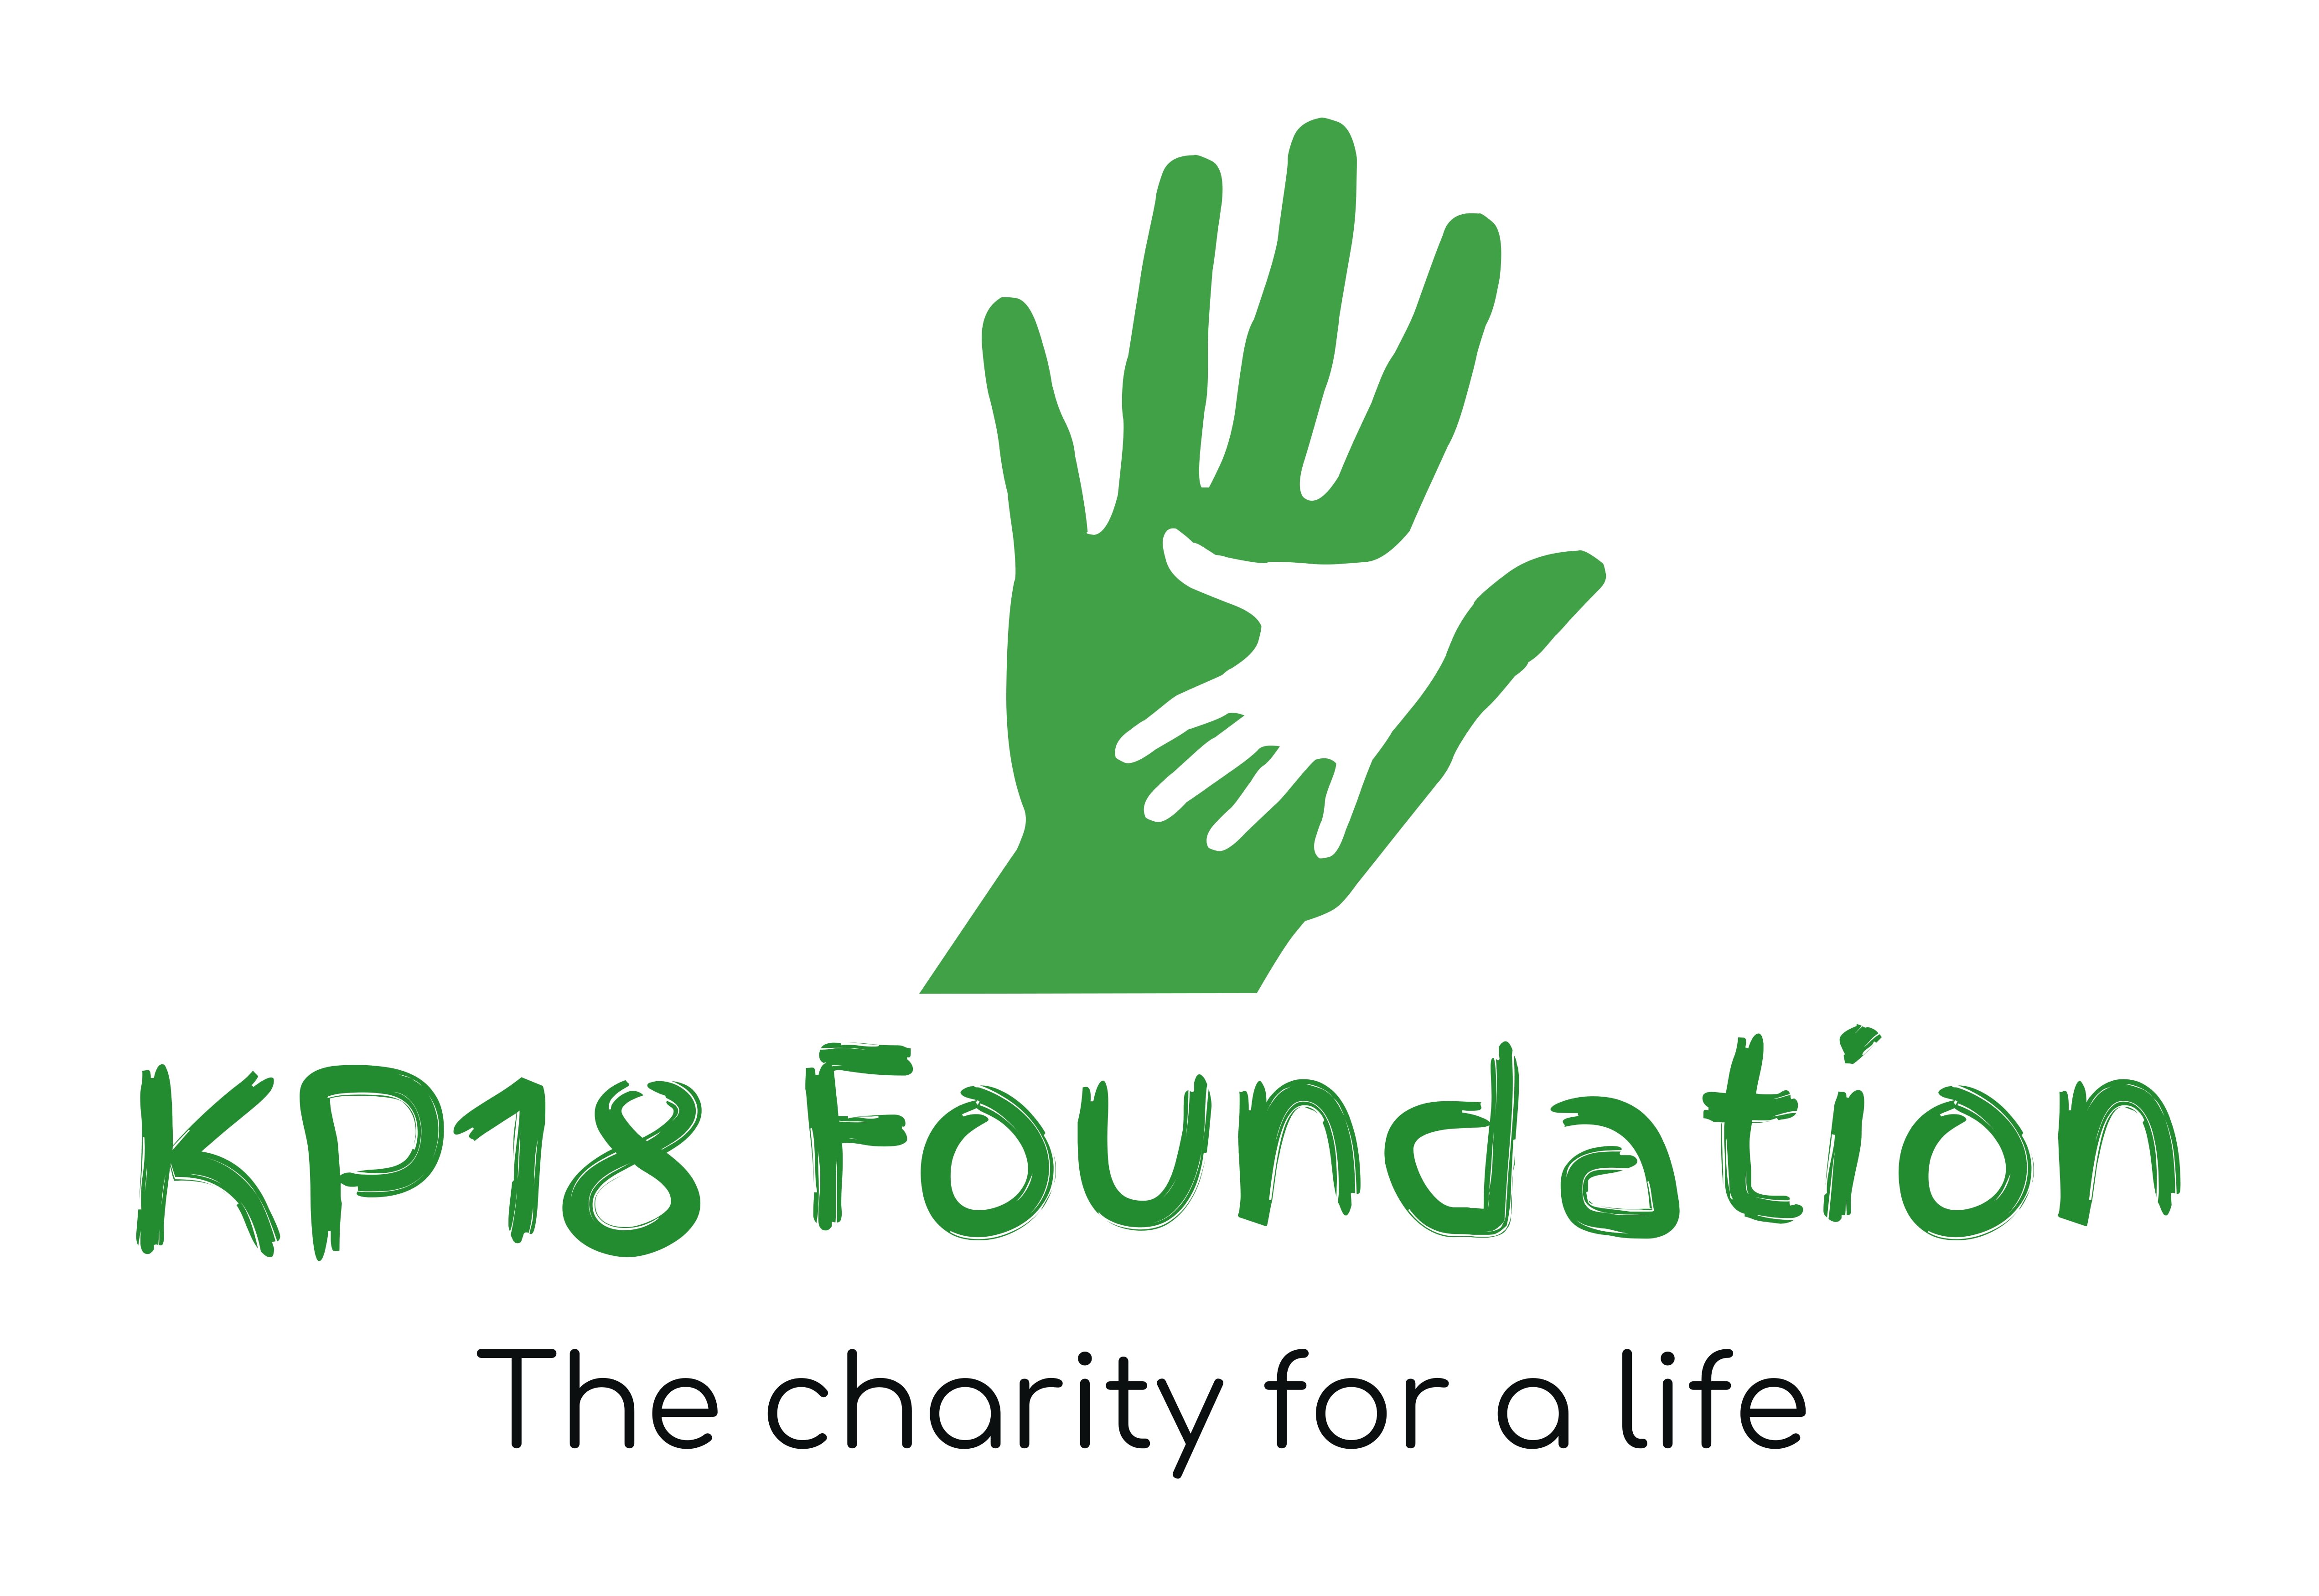 KP18 Foundation